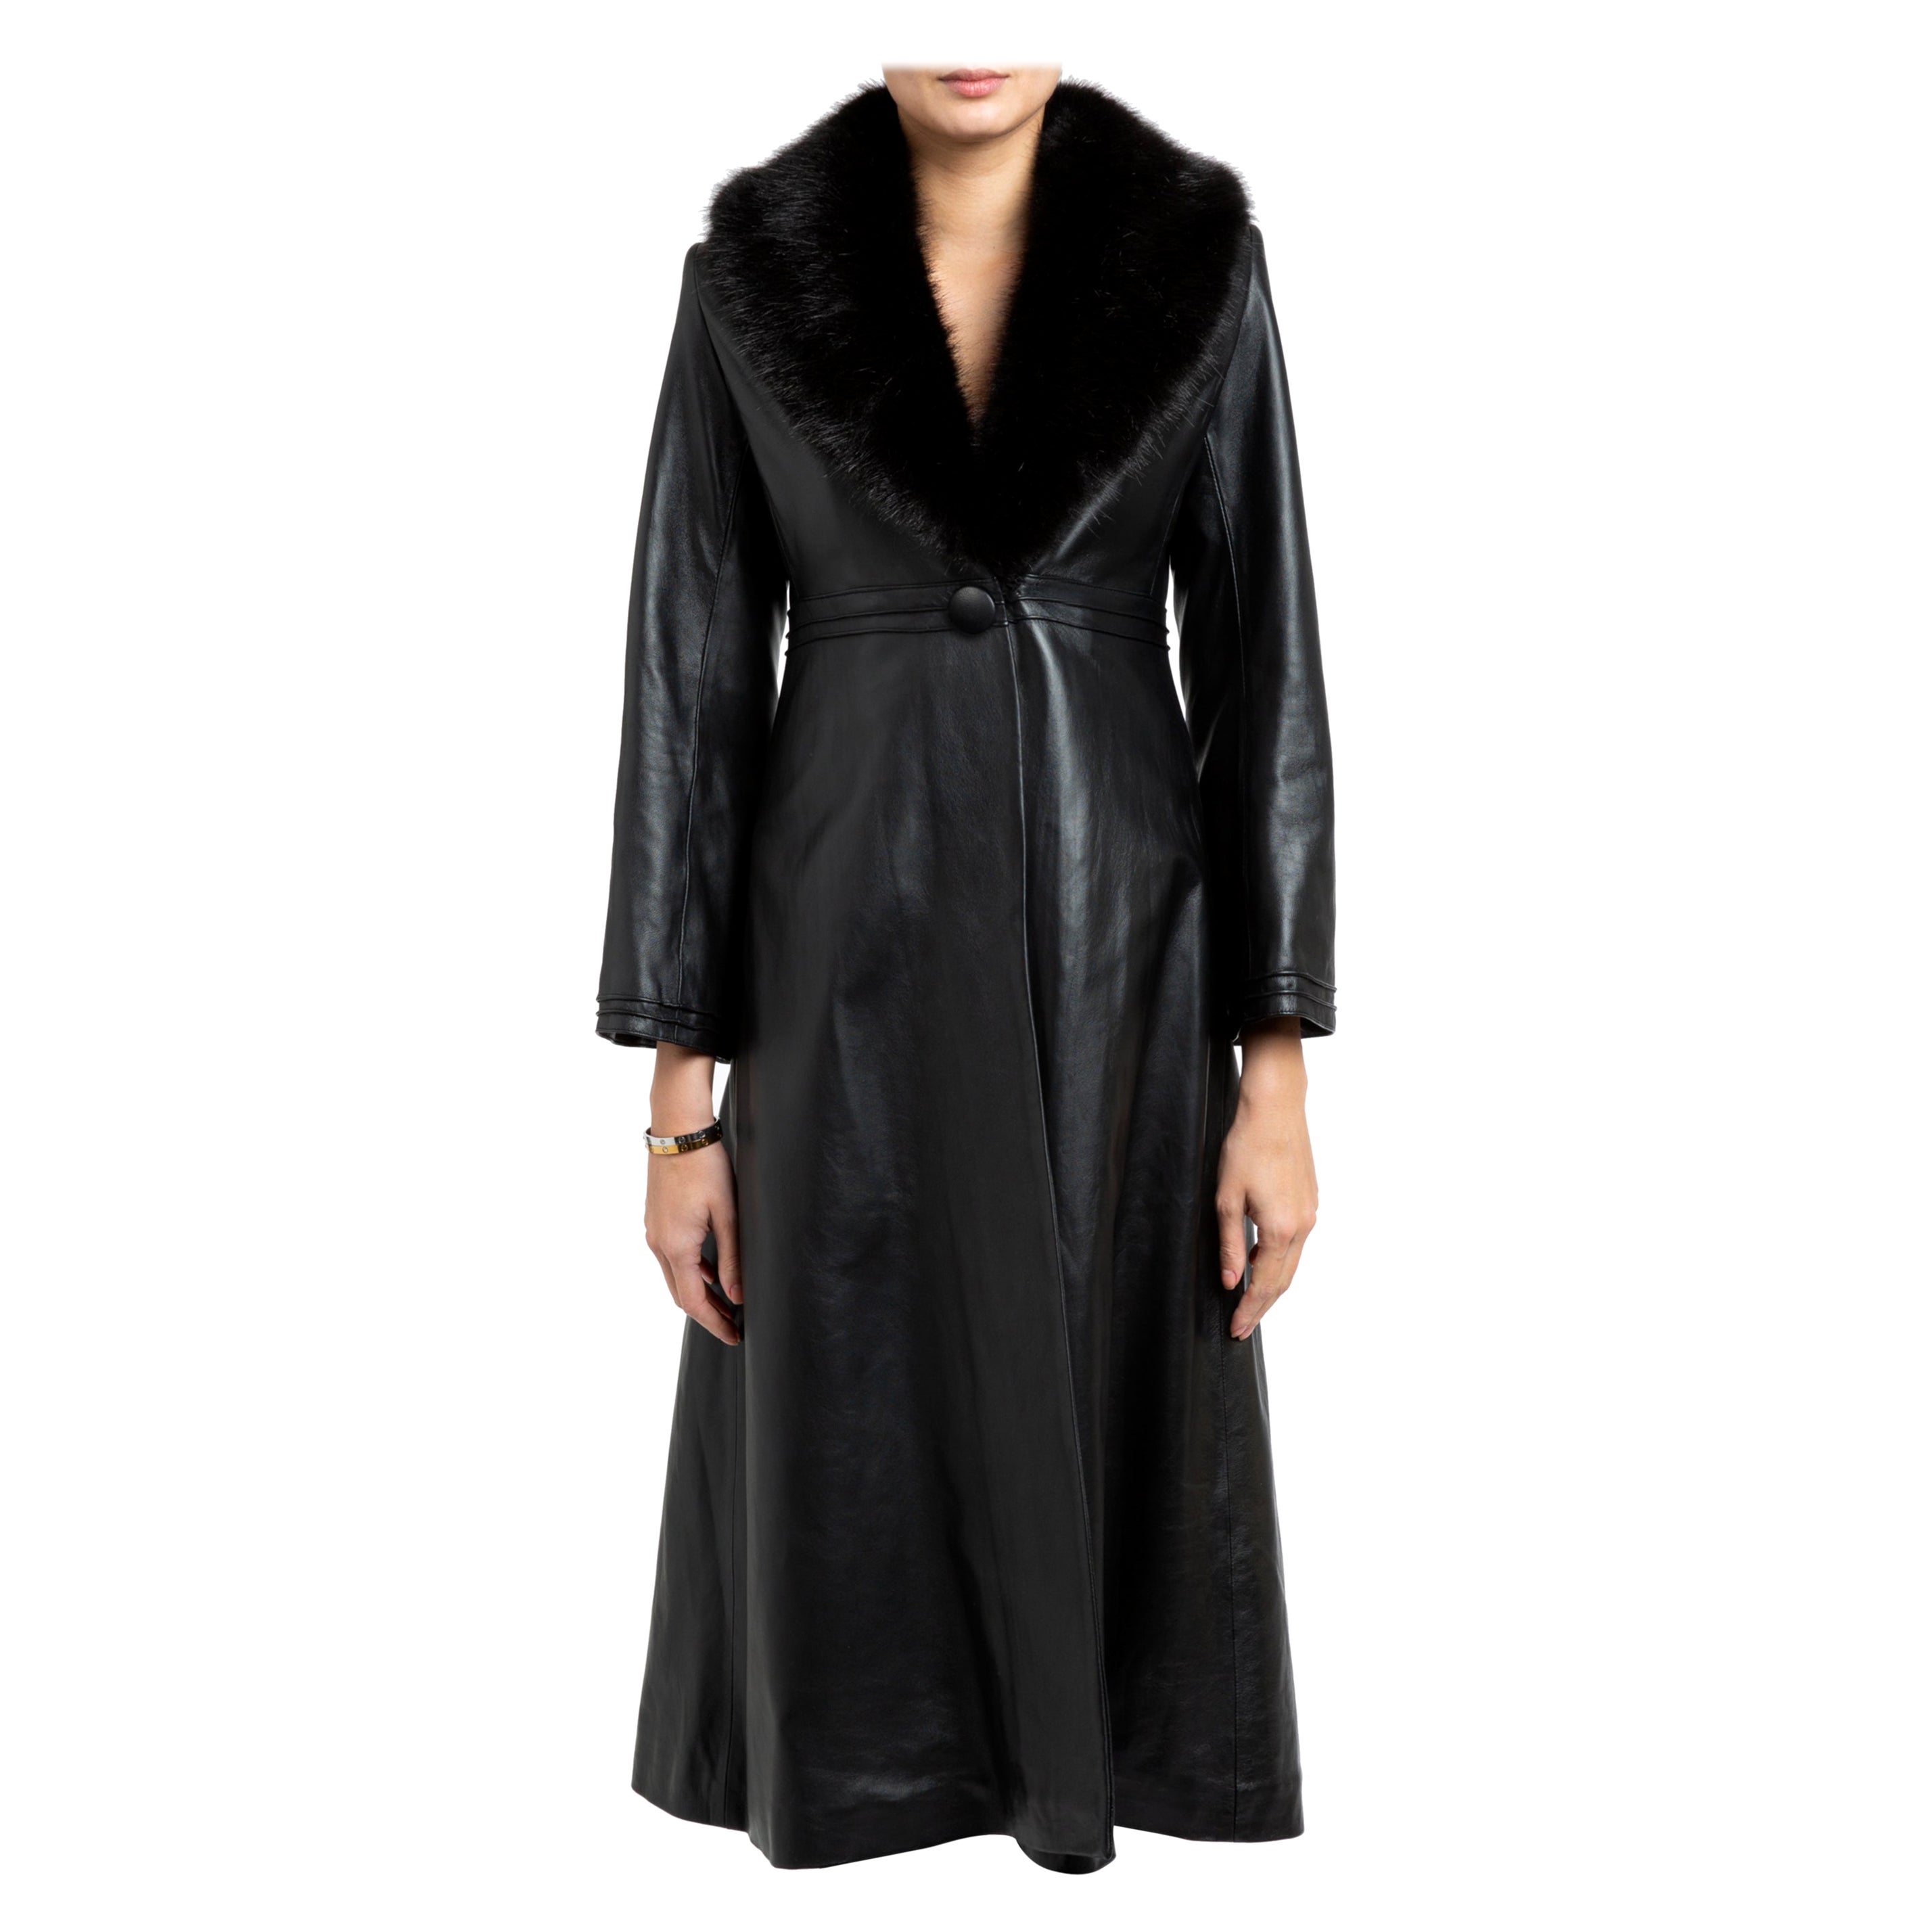 Verheyen London Edward Leather Coat with Faux Fur Collar in Black - Size uk 14 For Sale